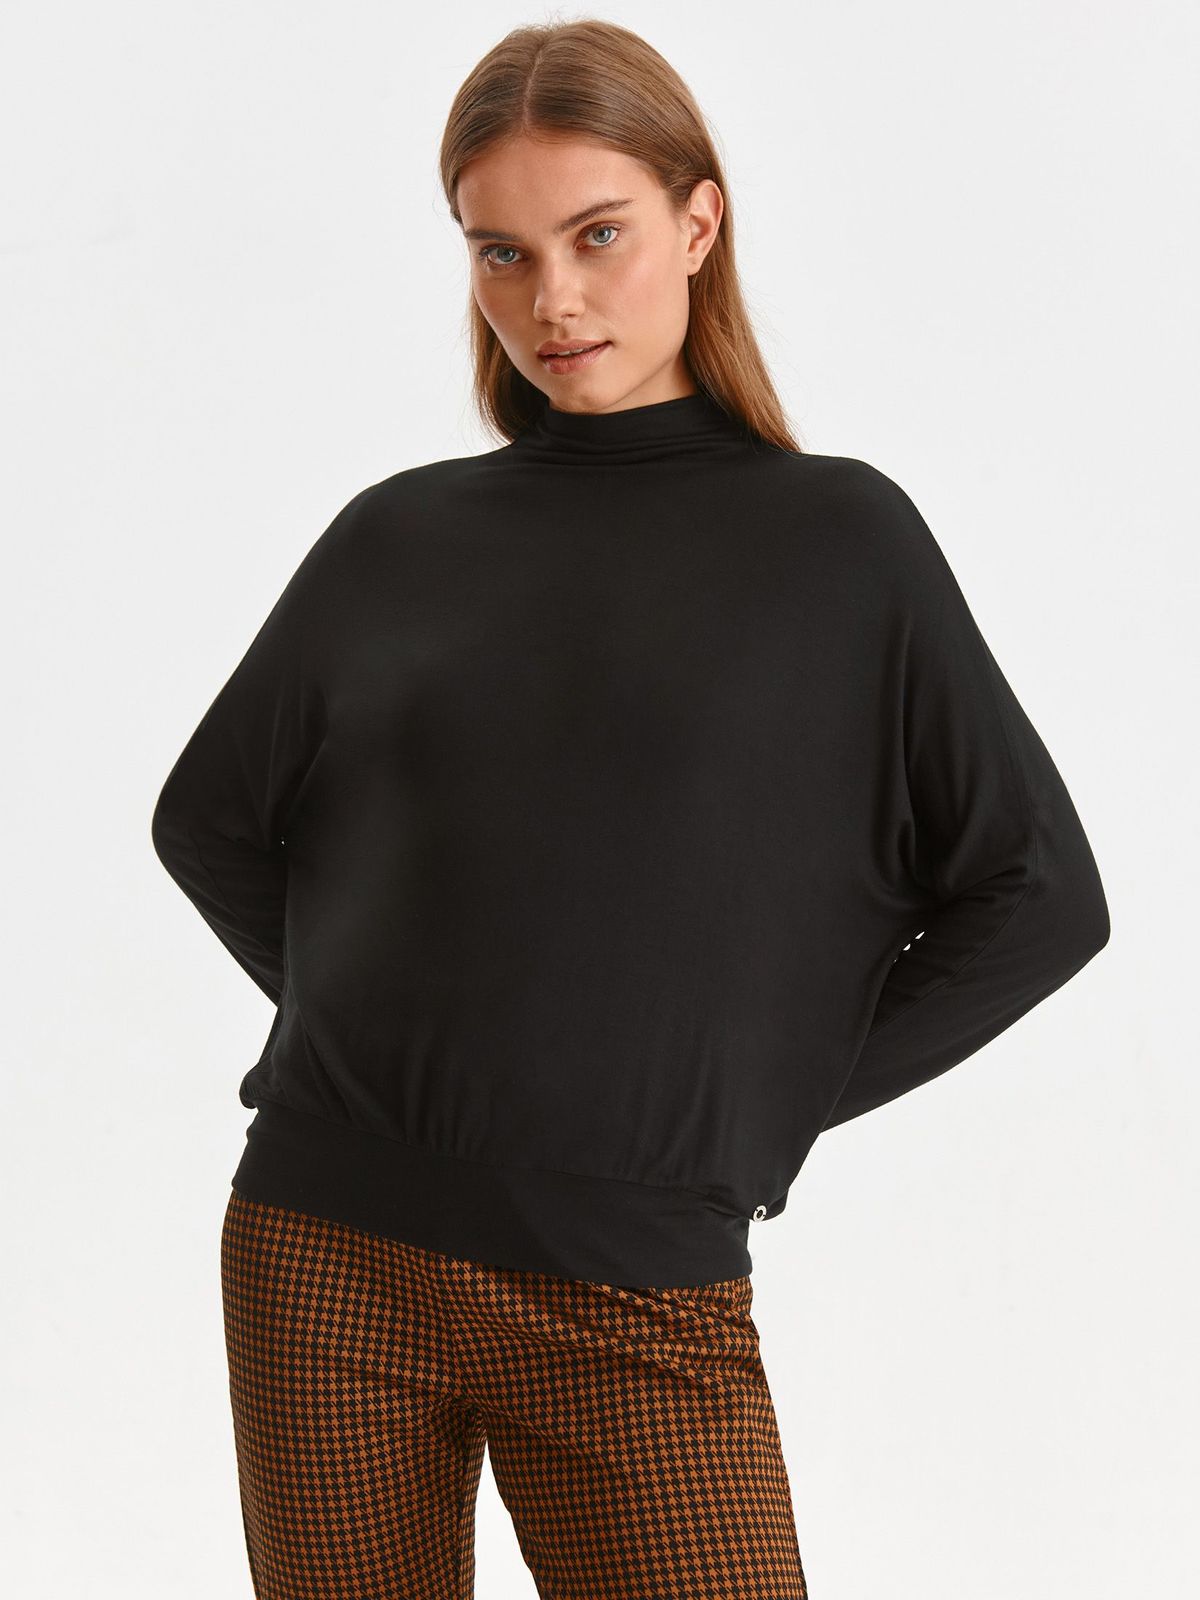 Bluza dama din material elastic neagra cu croi larg pe gat - Top Secret